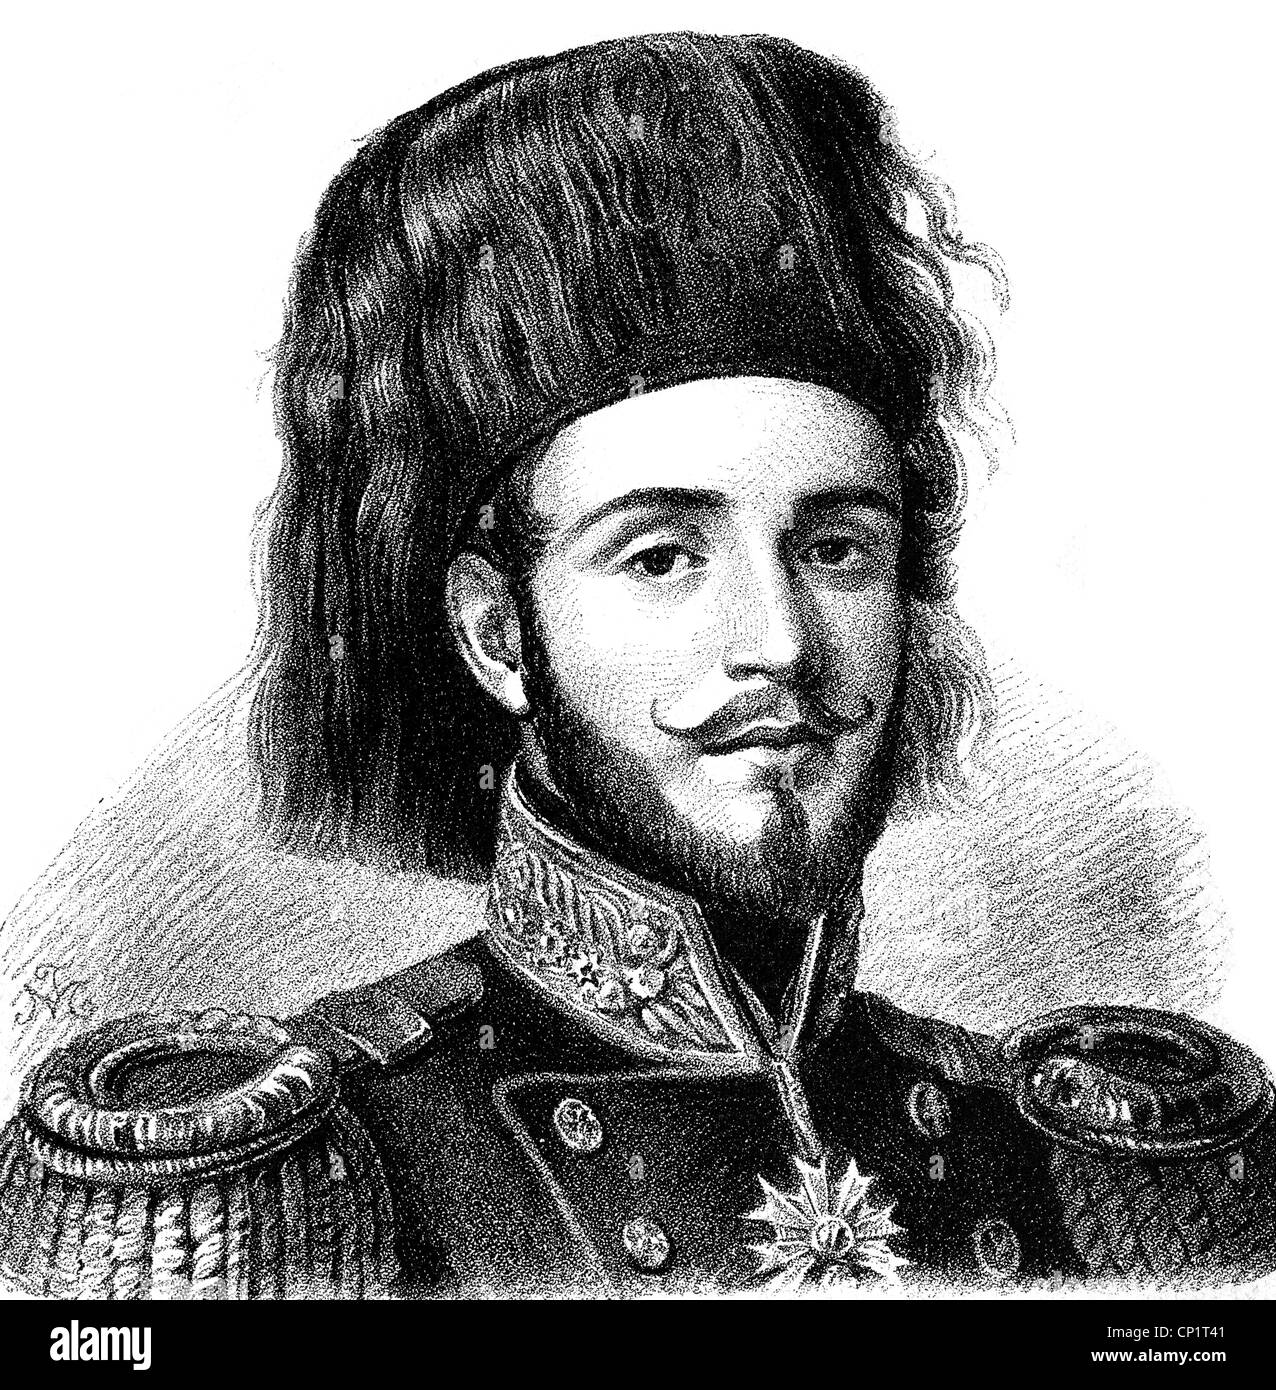 Abdulmecid I, 19.4.1823 - 25.6.1861, Sultan of the Ottoman Empire 1.7.1839 - 25.6.1861, portrait, wood engraving, 19th century, Stock Photo